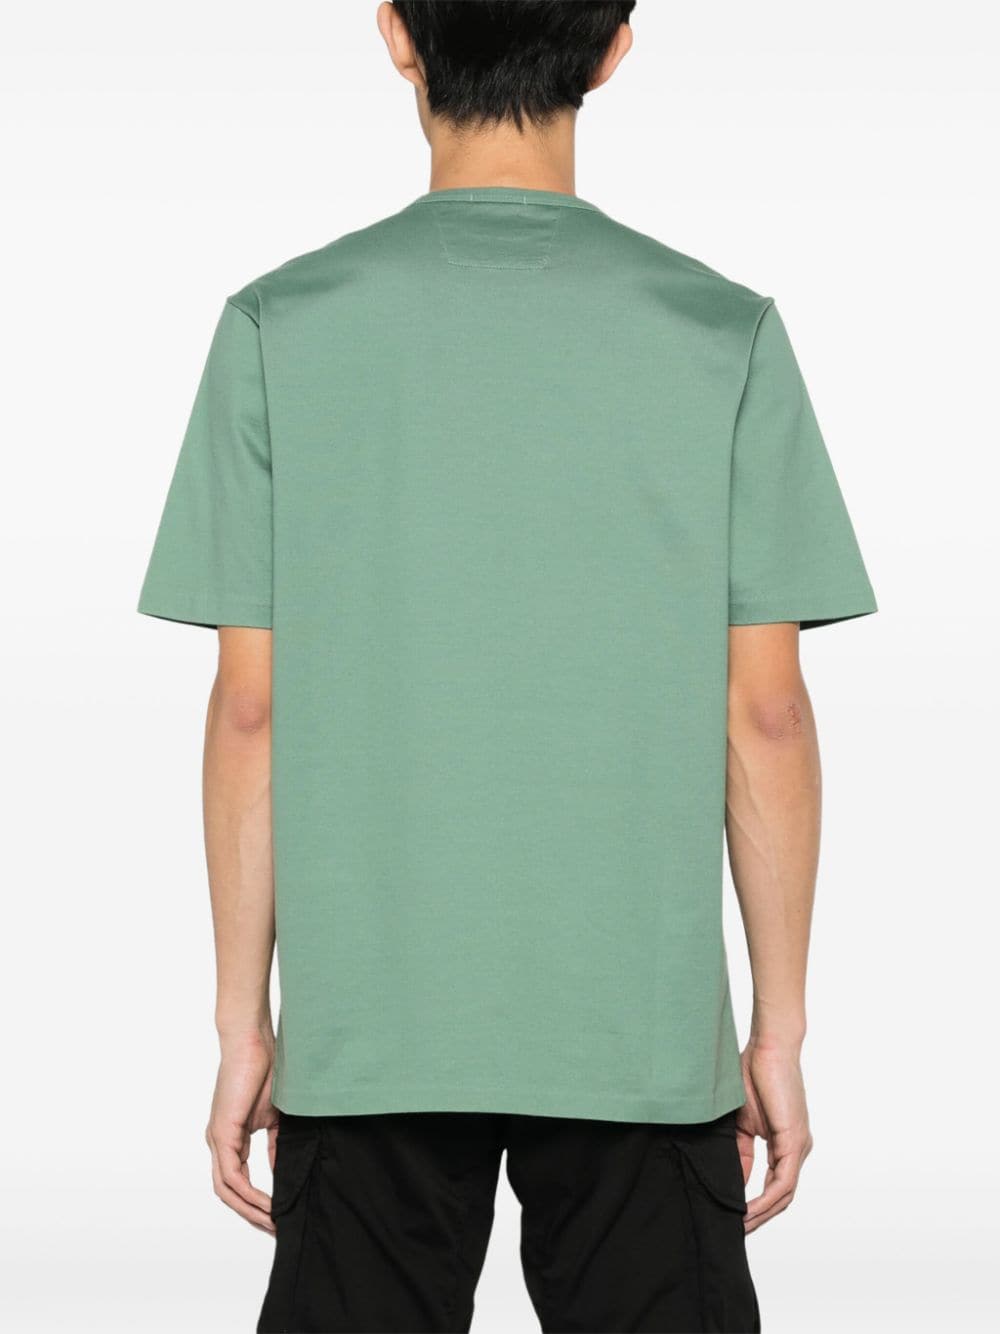 CP Company -T-shirt Green Bay Britih Sailor - Lothaire